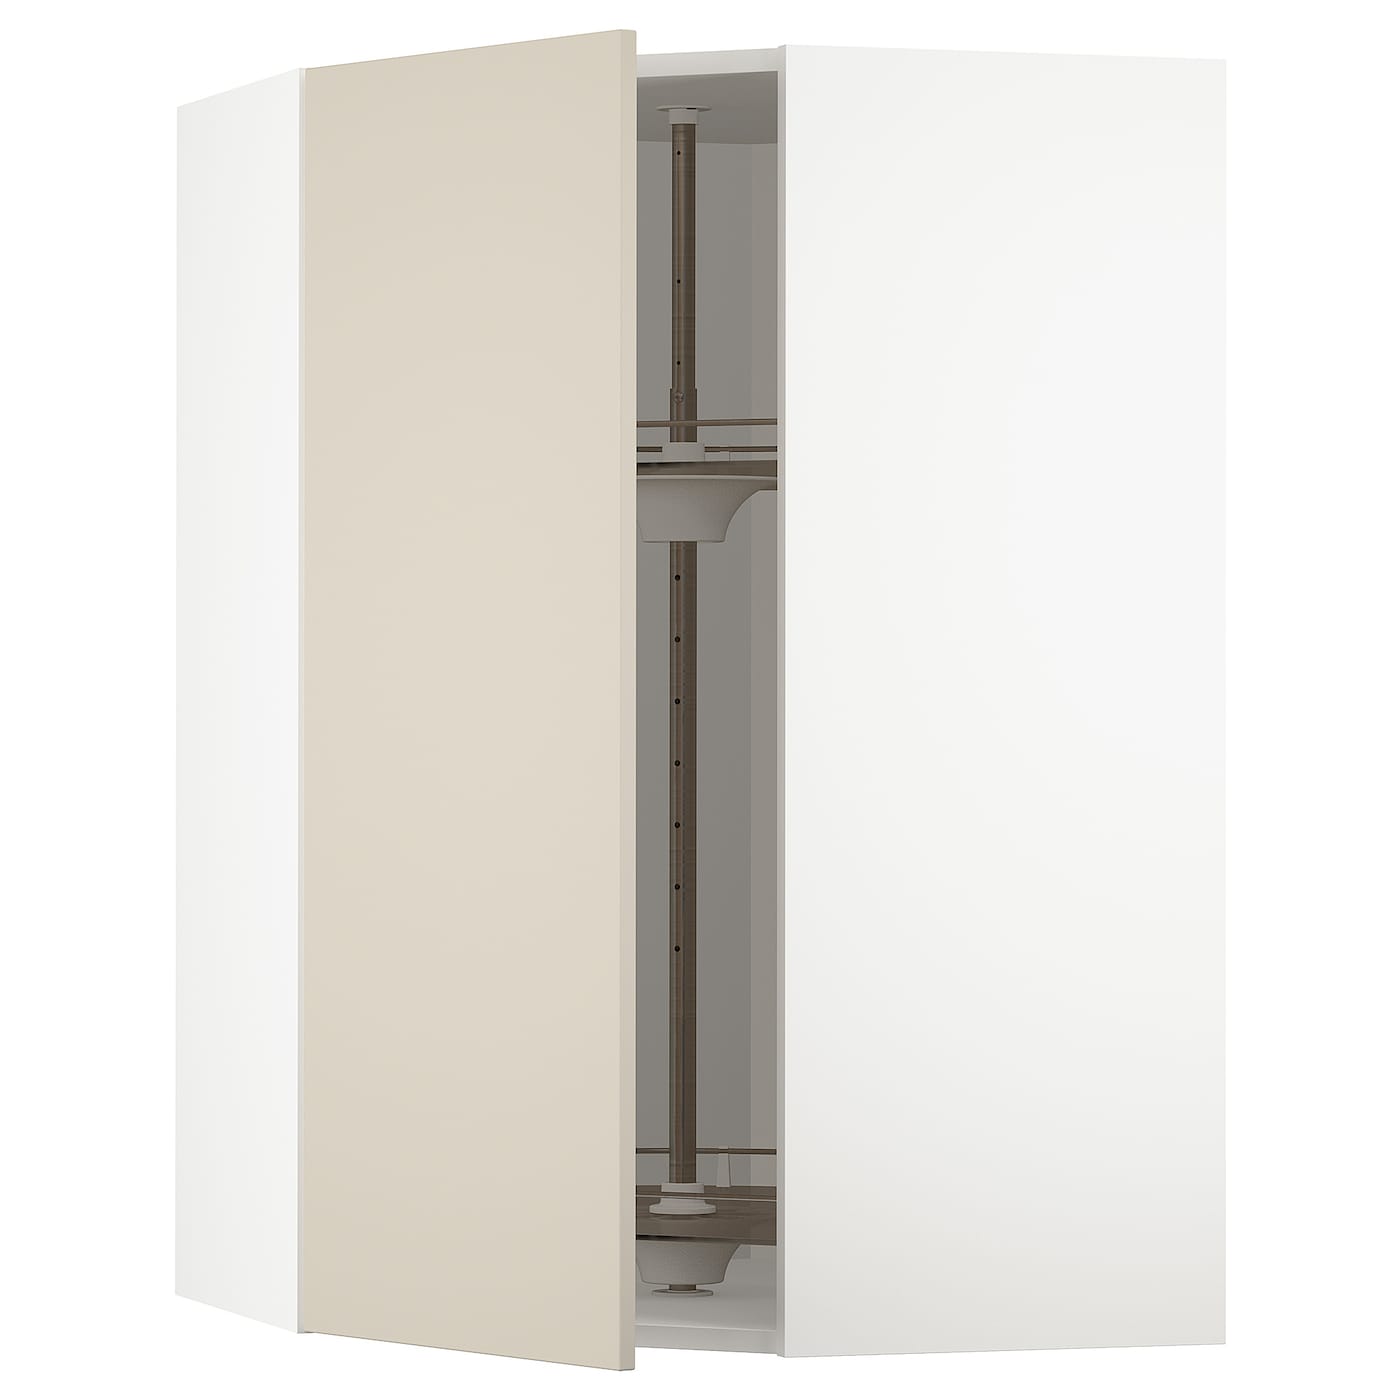 Угловой навесной шкаф с каруселью - METOD  IKEA/  МЕТОД ИКЕА, 100х68 см, белый/бежевй